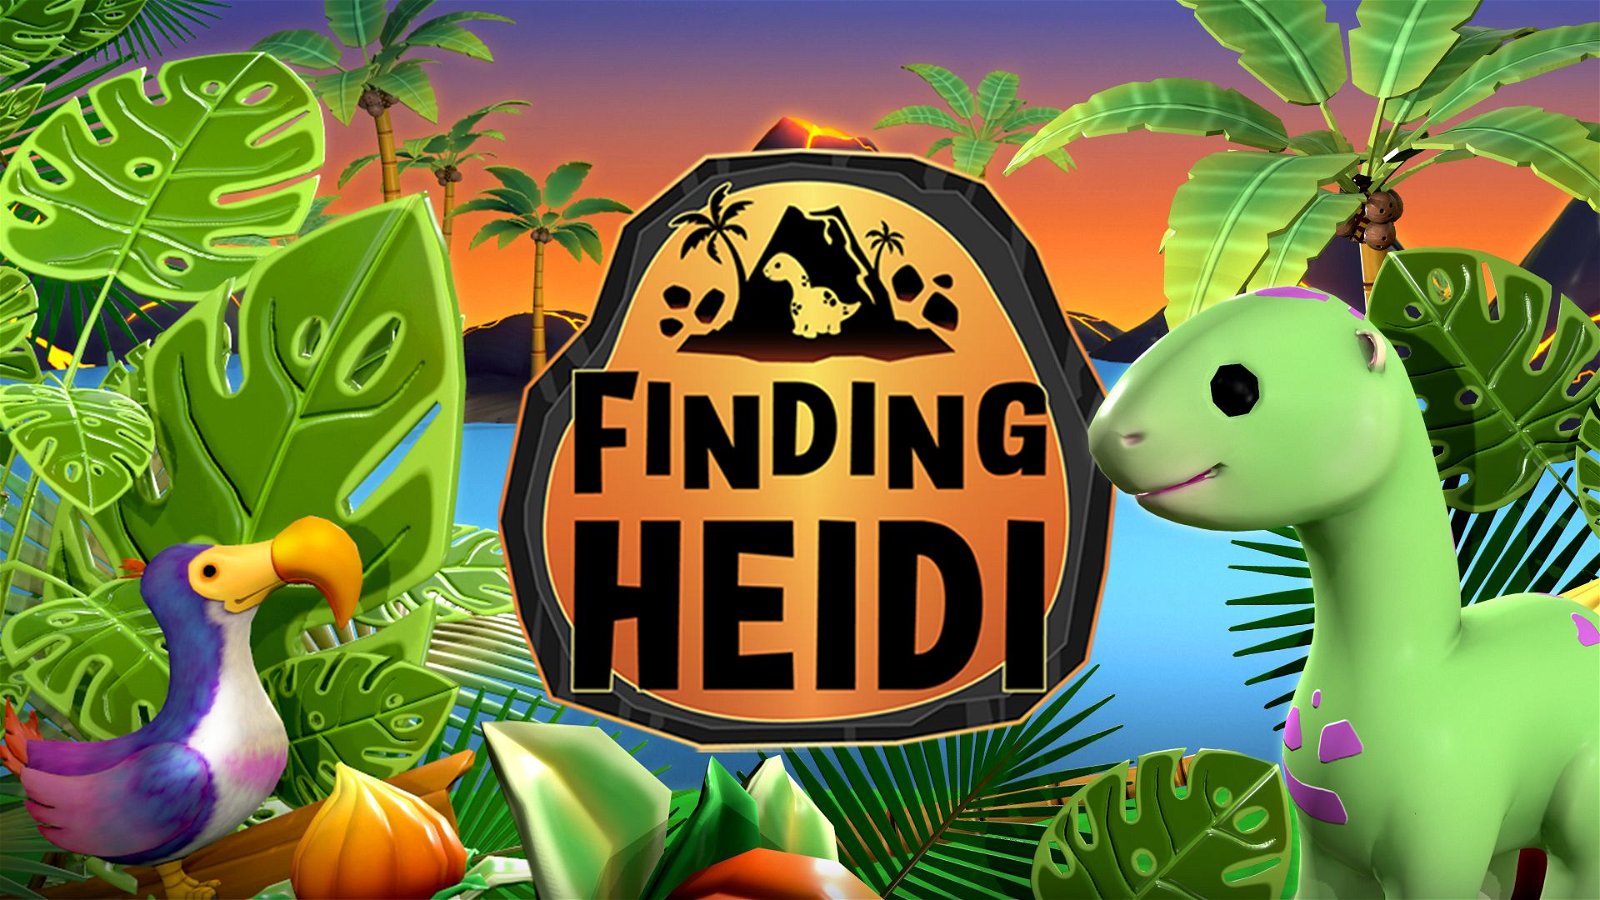 Image of Finding Heidi